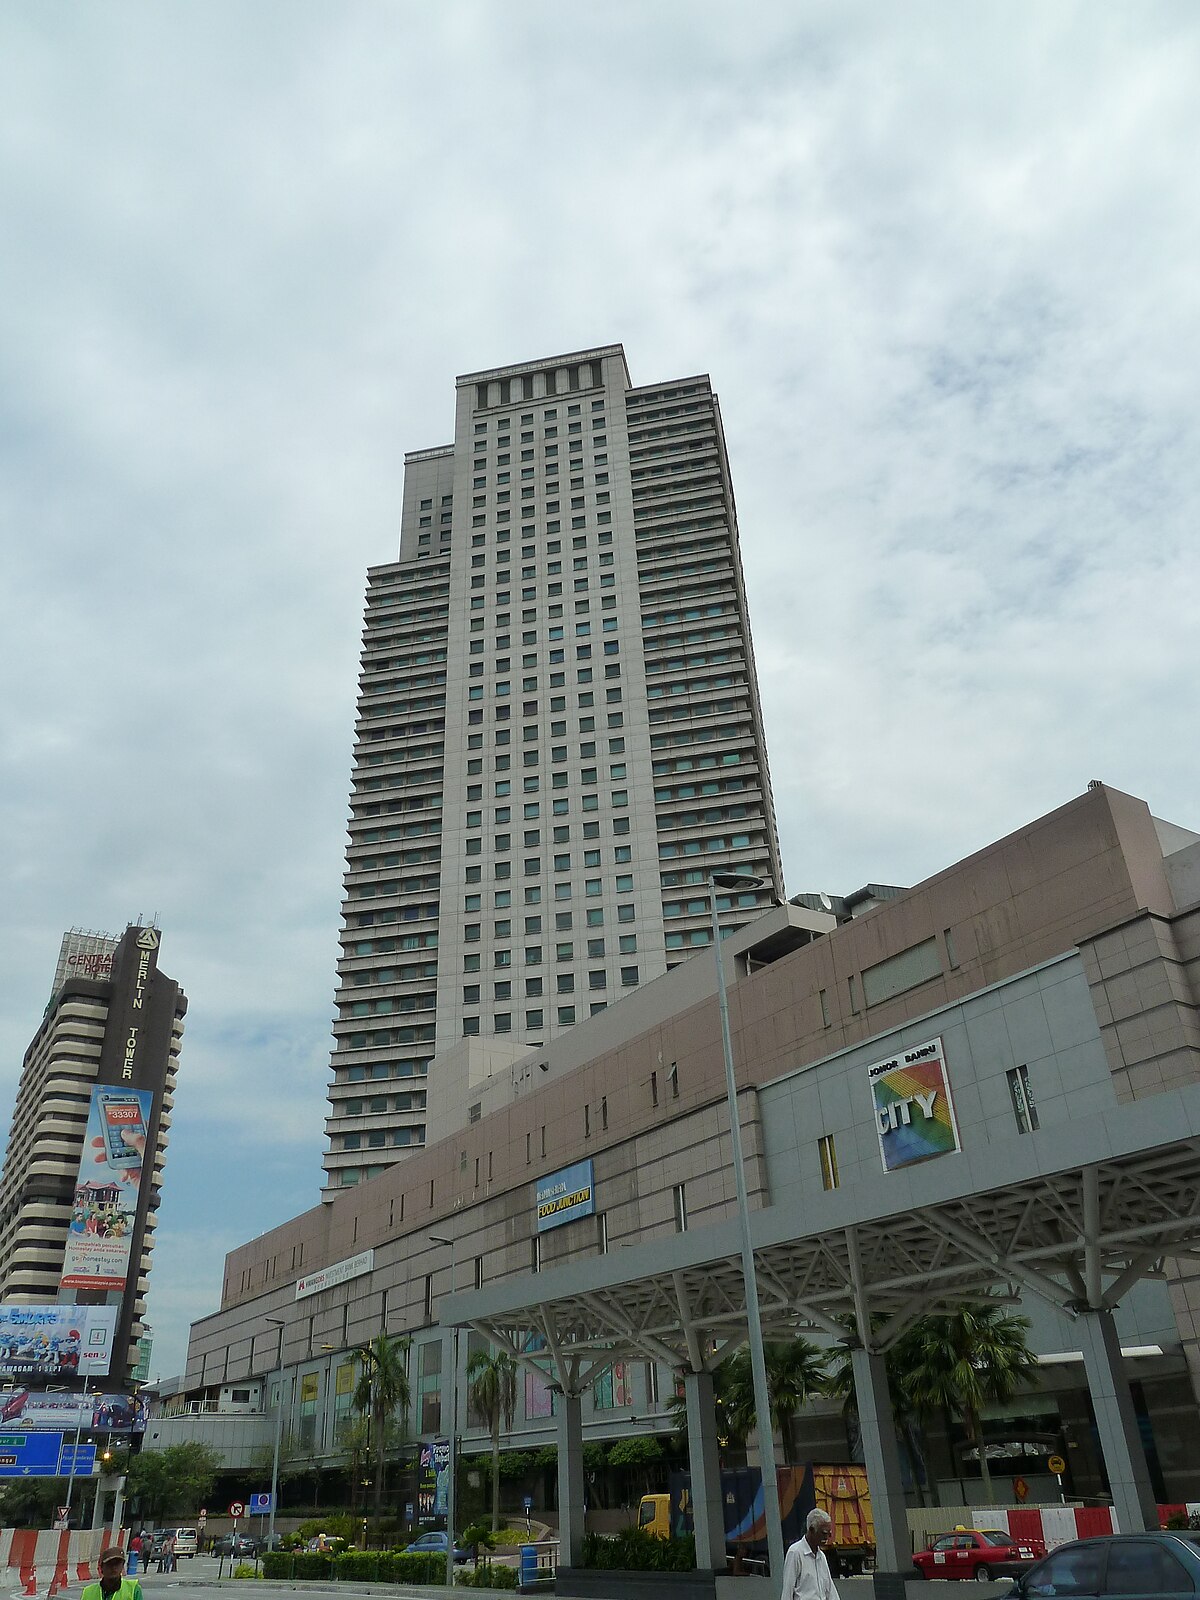 Johor Bahru City Square - Wikipedia